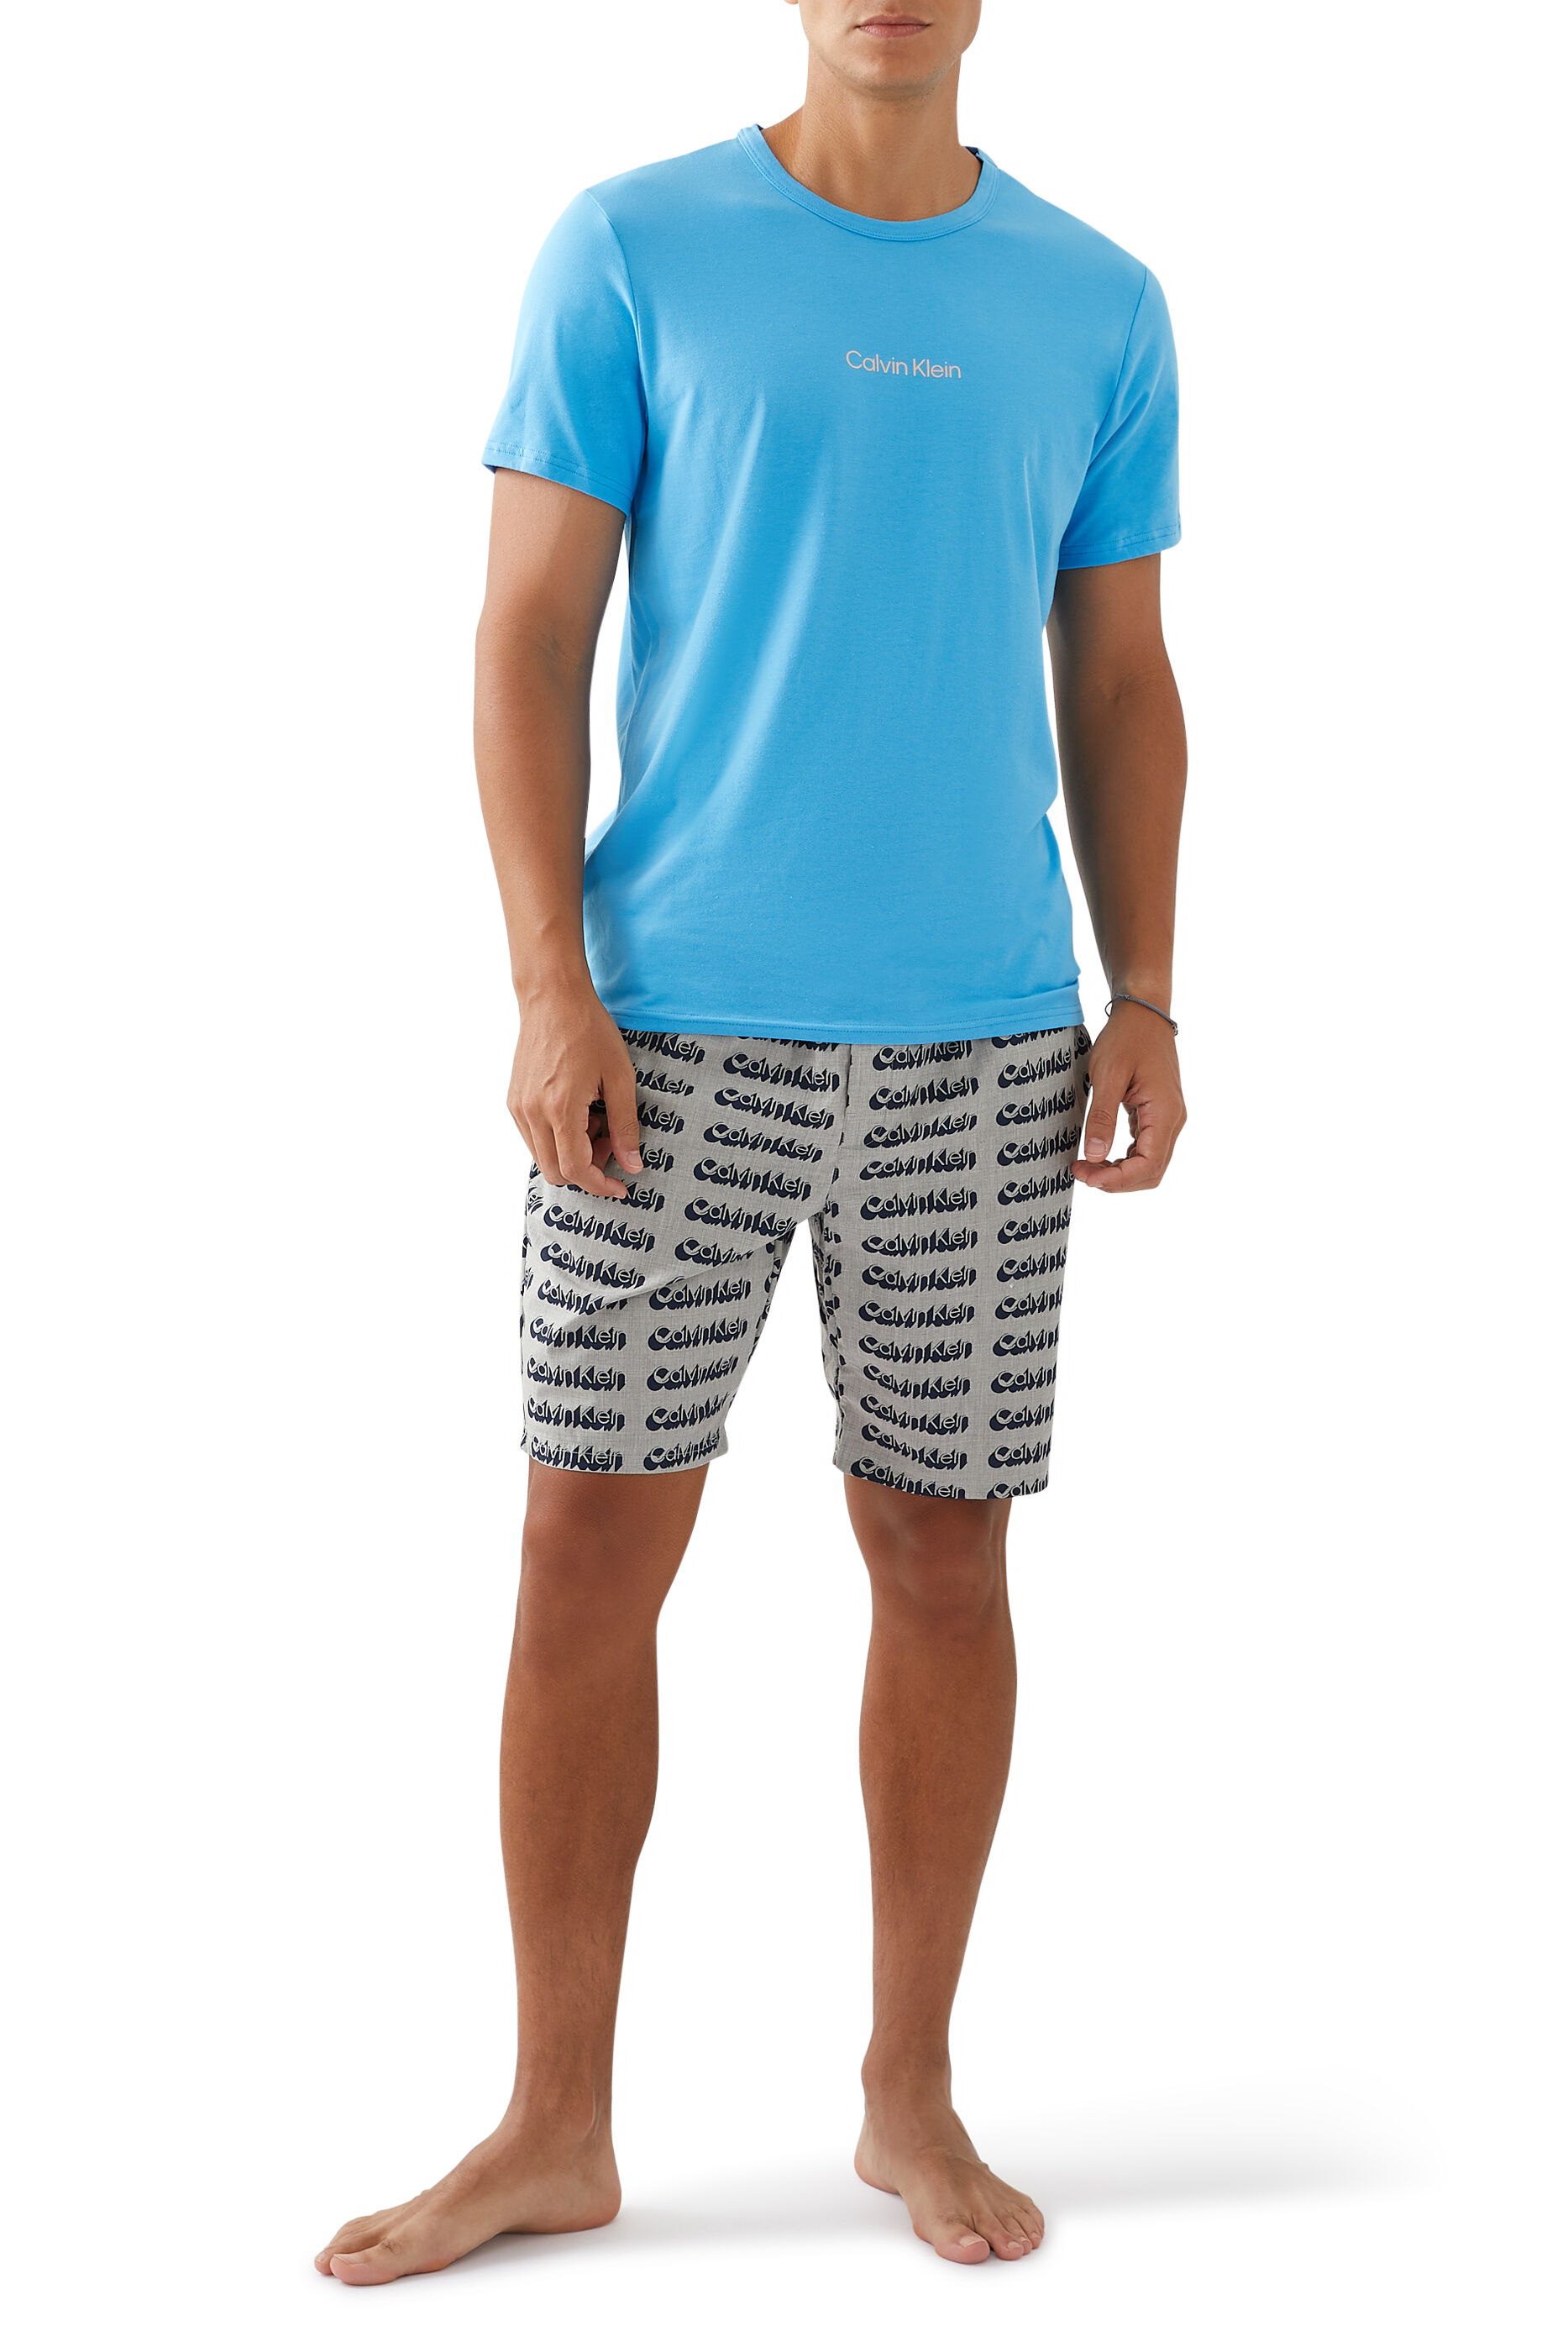 Calvin Klein Cotton Short Sleeve T-shirt Shorts Pj Set in Blue for Men Mens Clothing Nightwear and sleepwear 